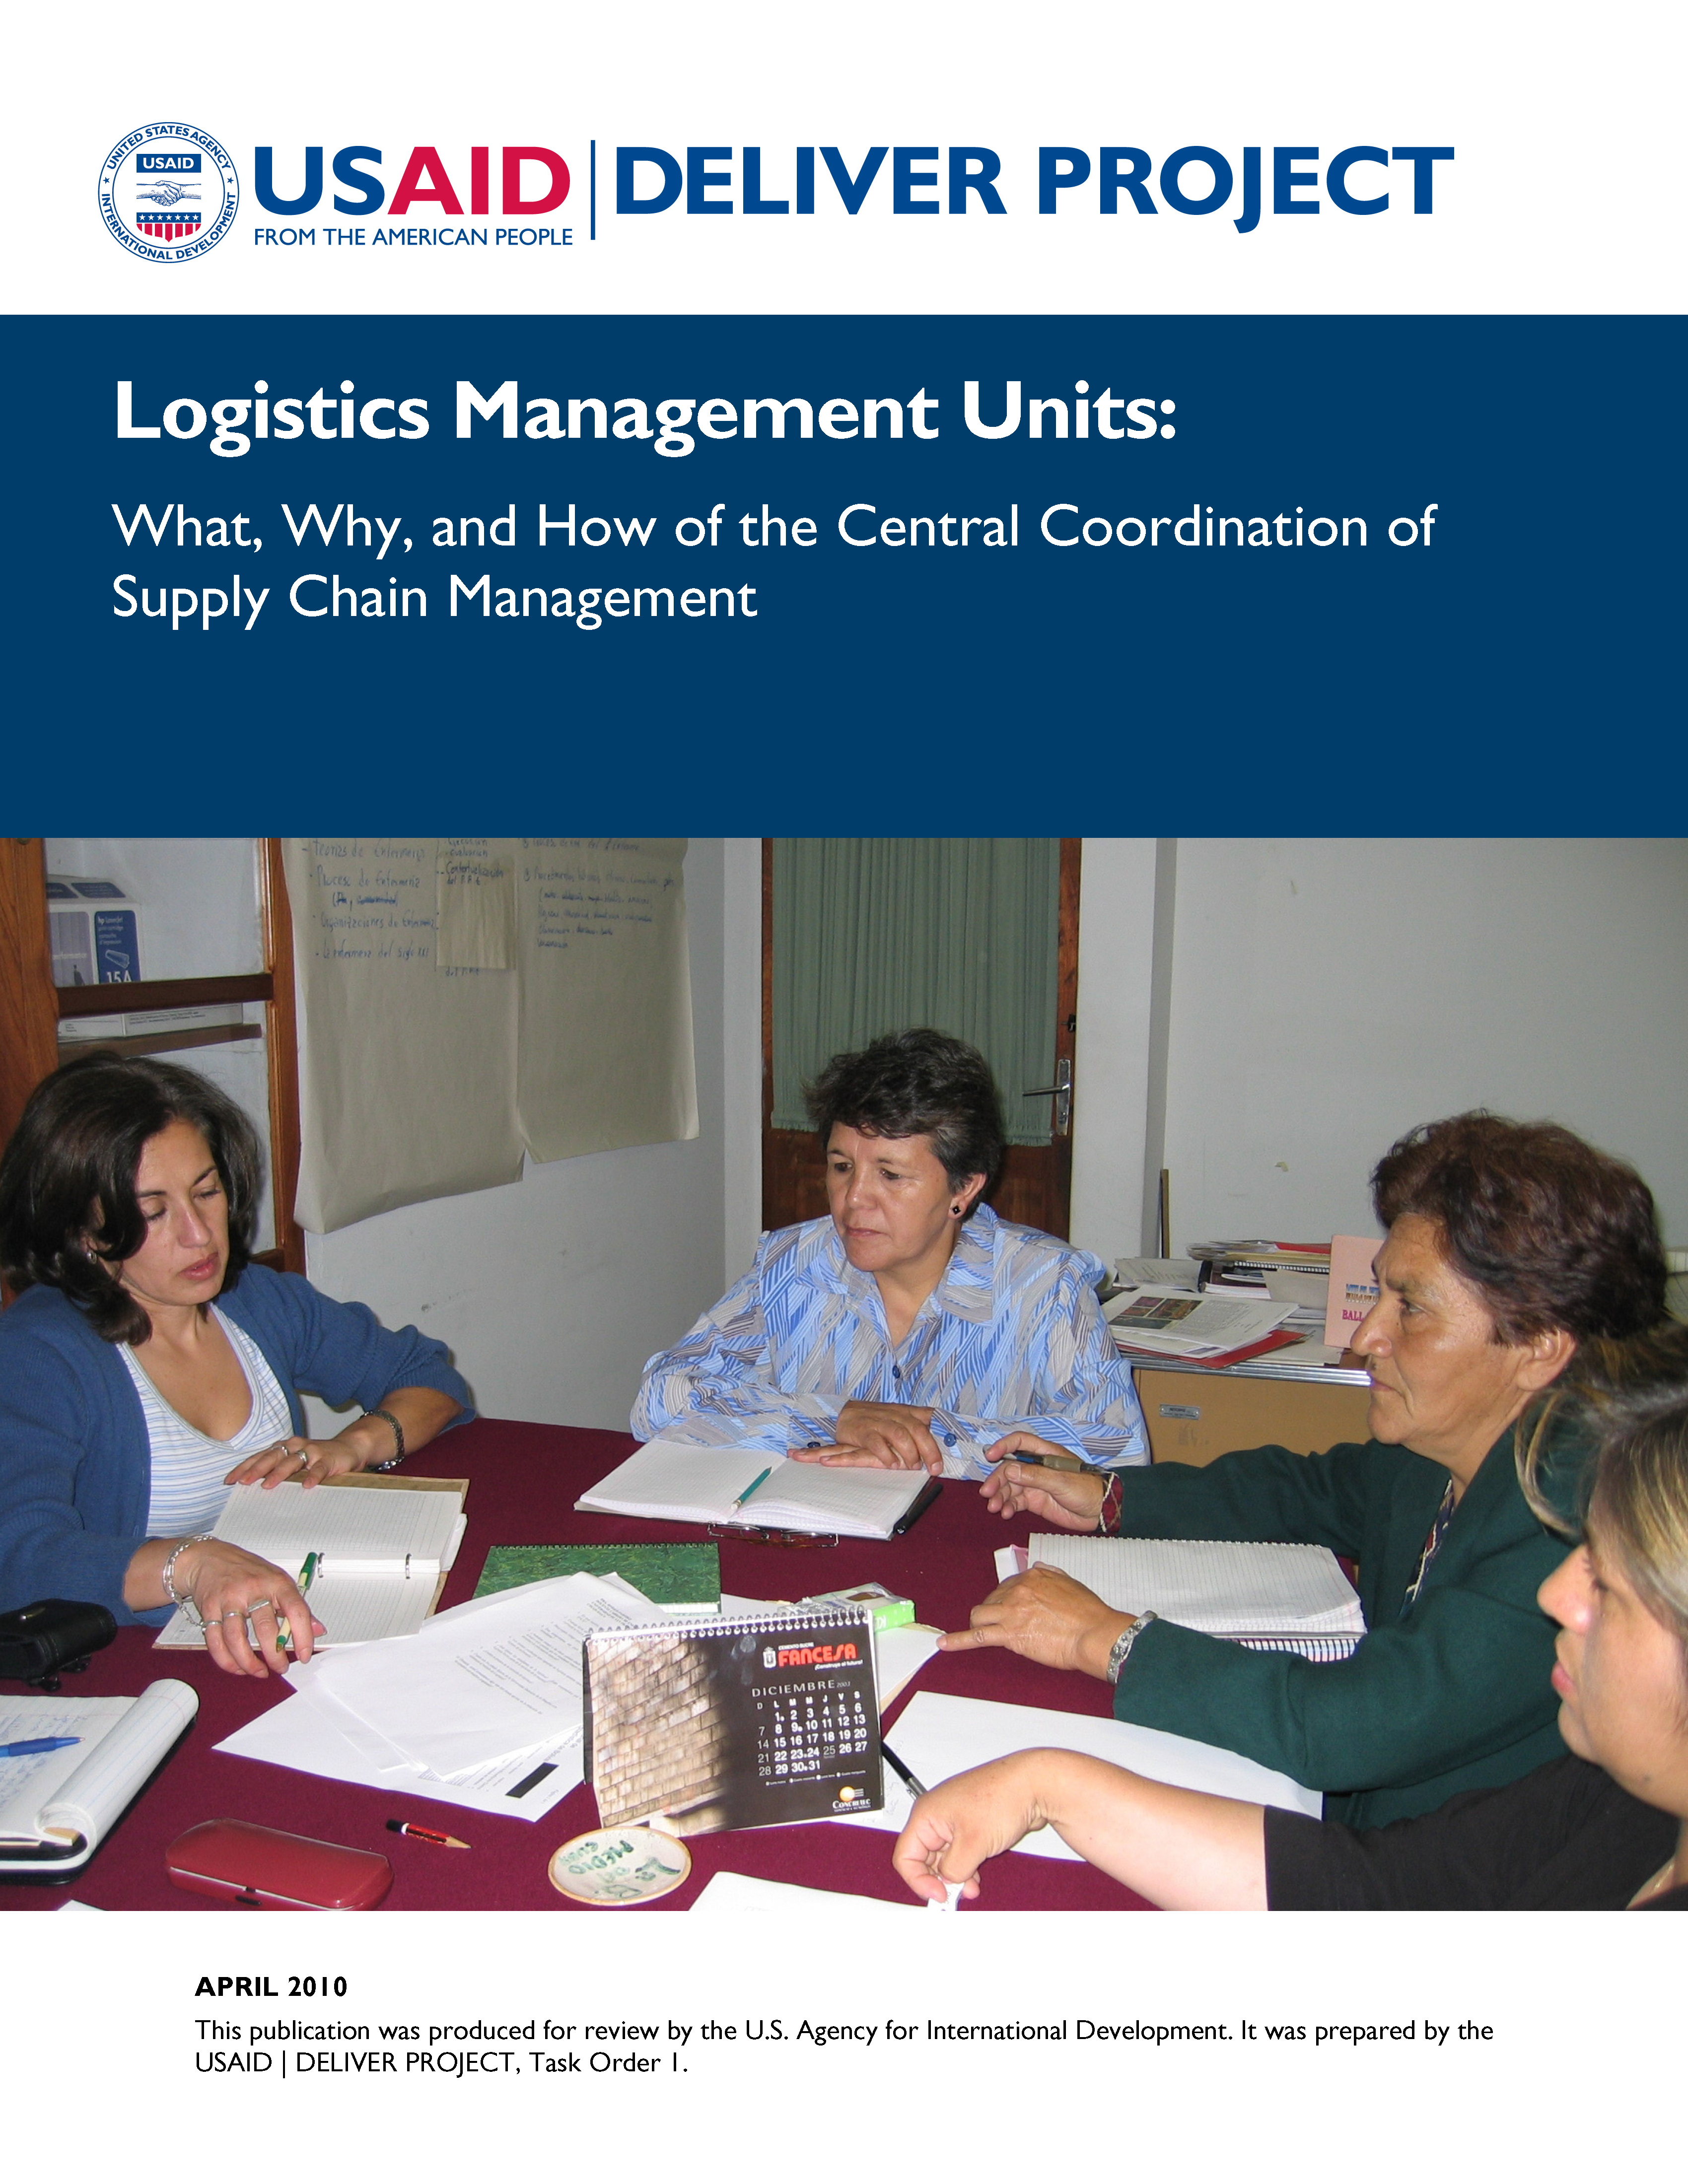 Cover for Logistics Management Units guide